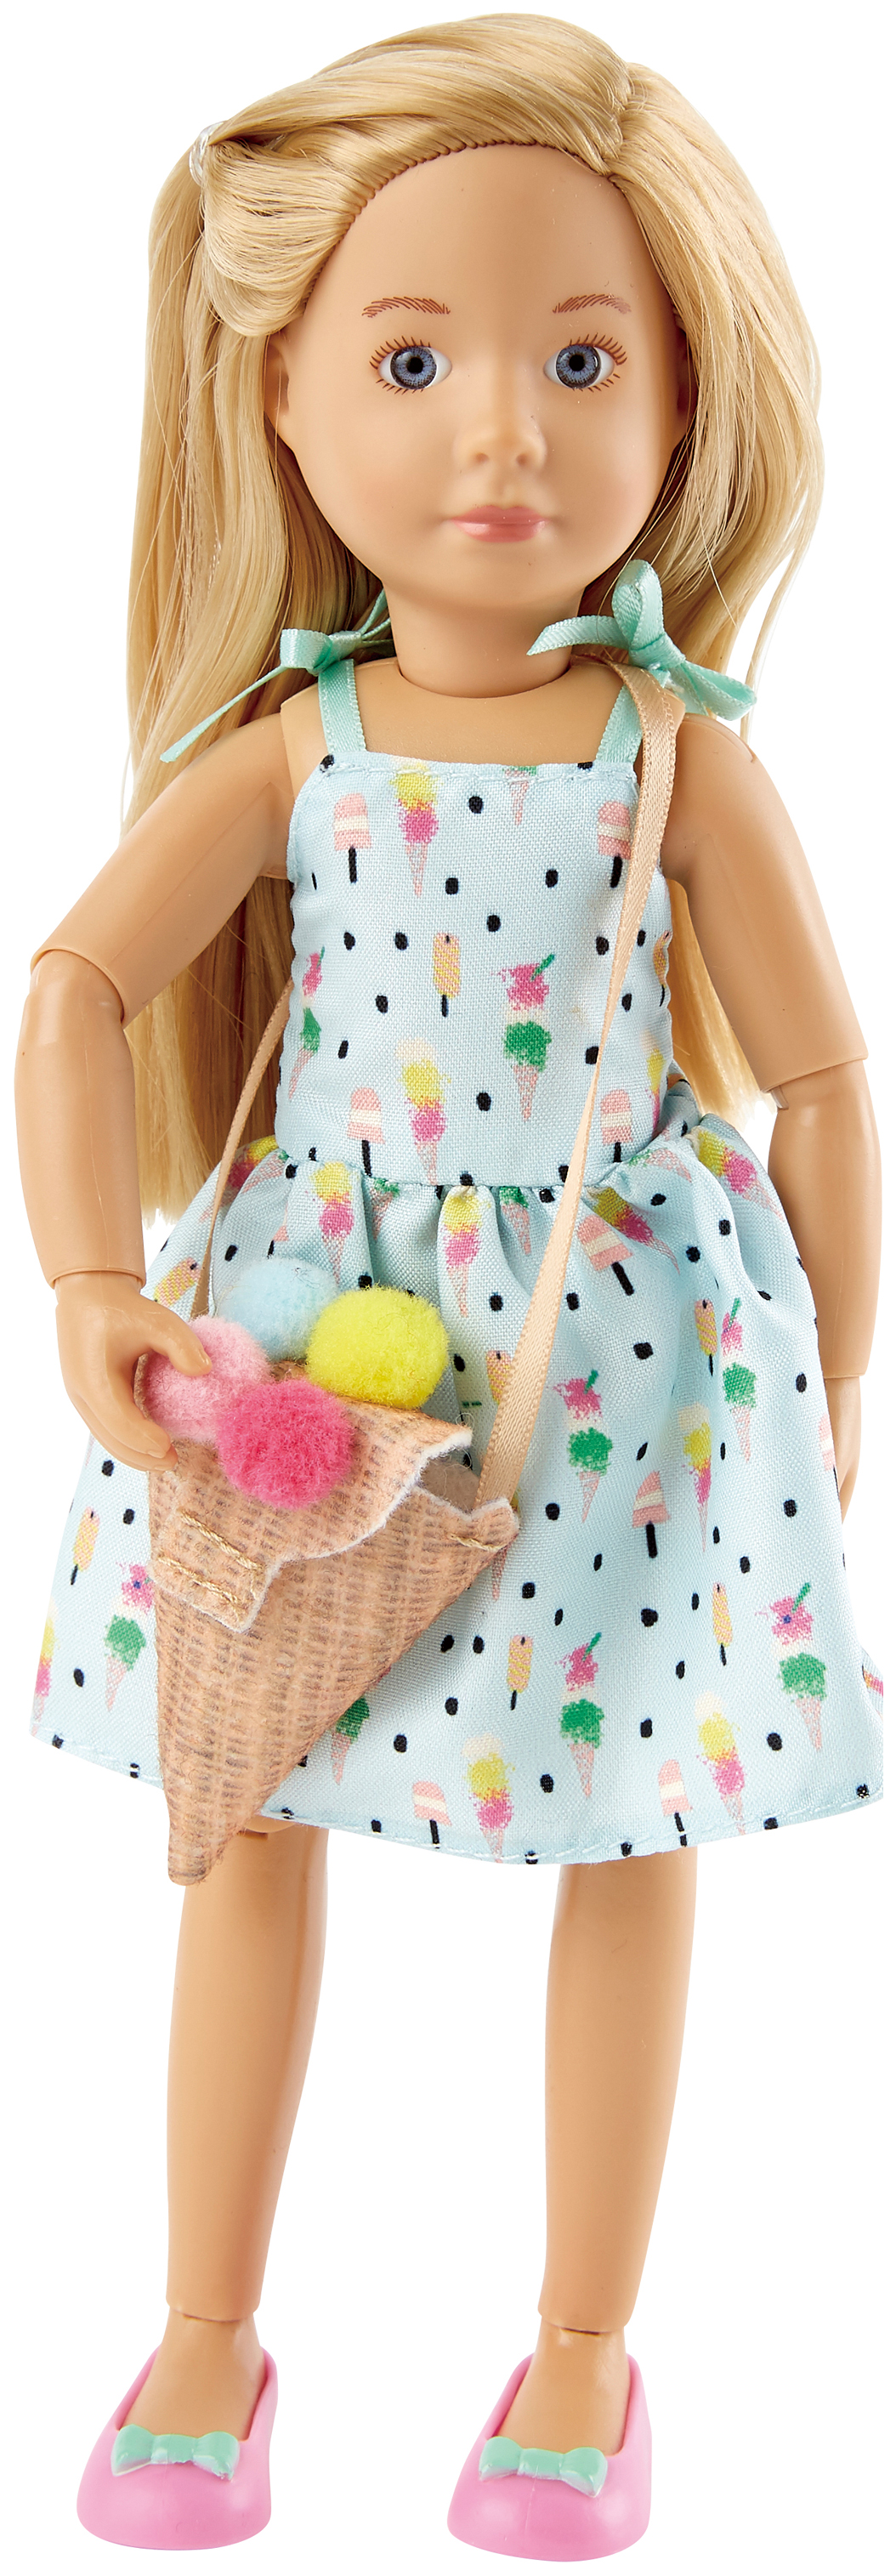 Кукла Kruselings Вера в сарафане и сумкой-мороженое